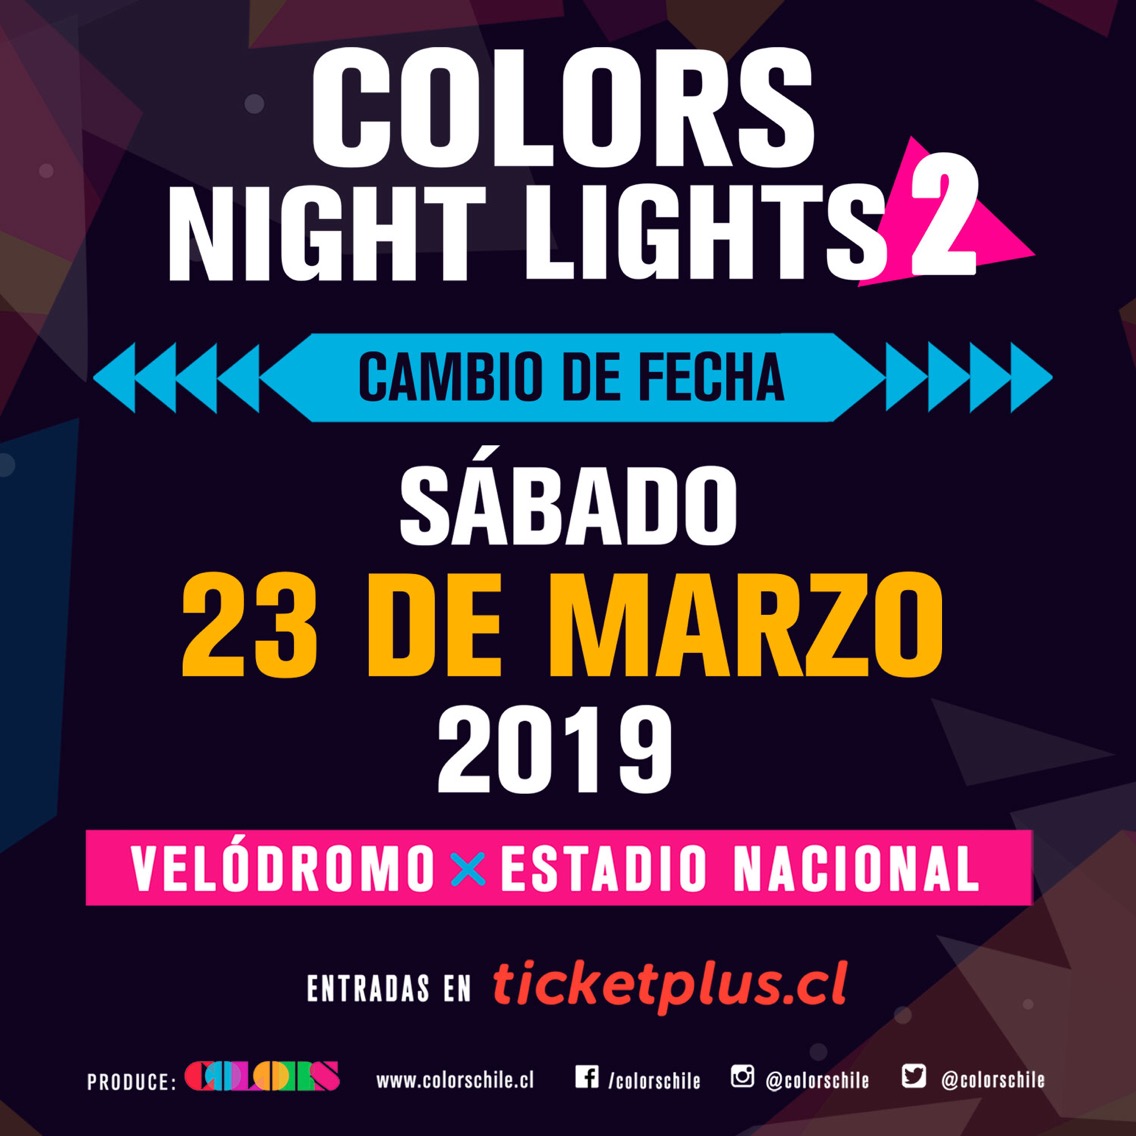 Colors Night Lights 2